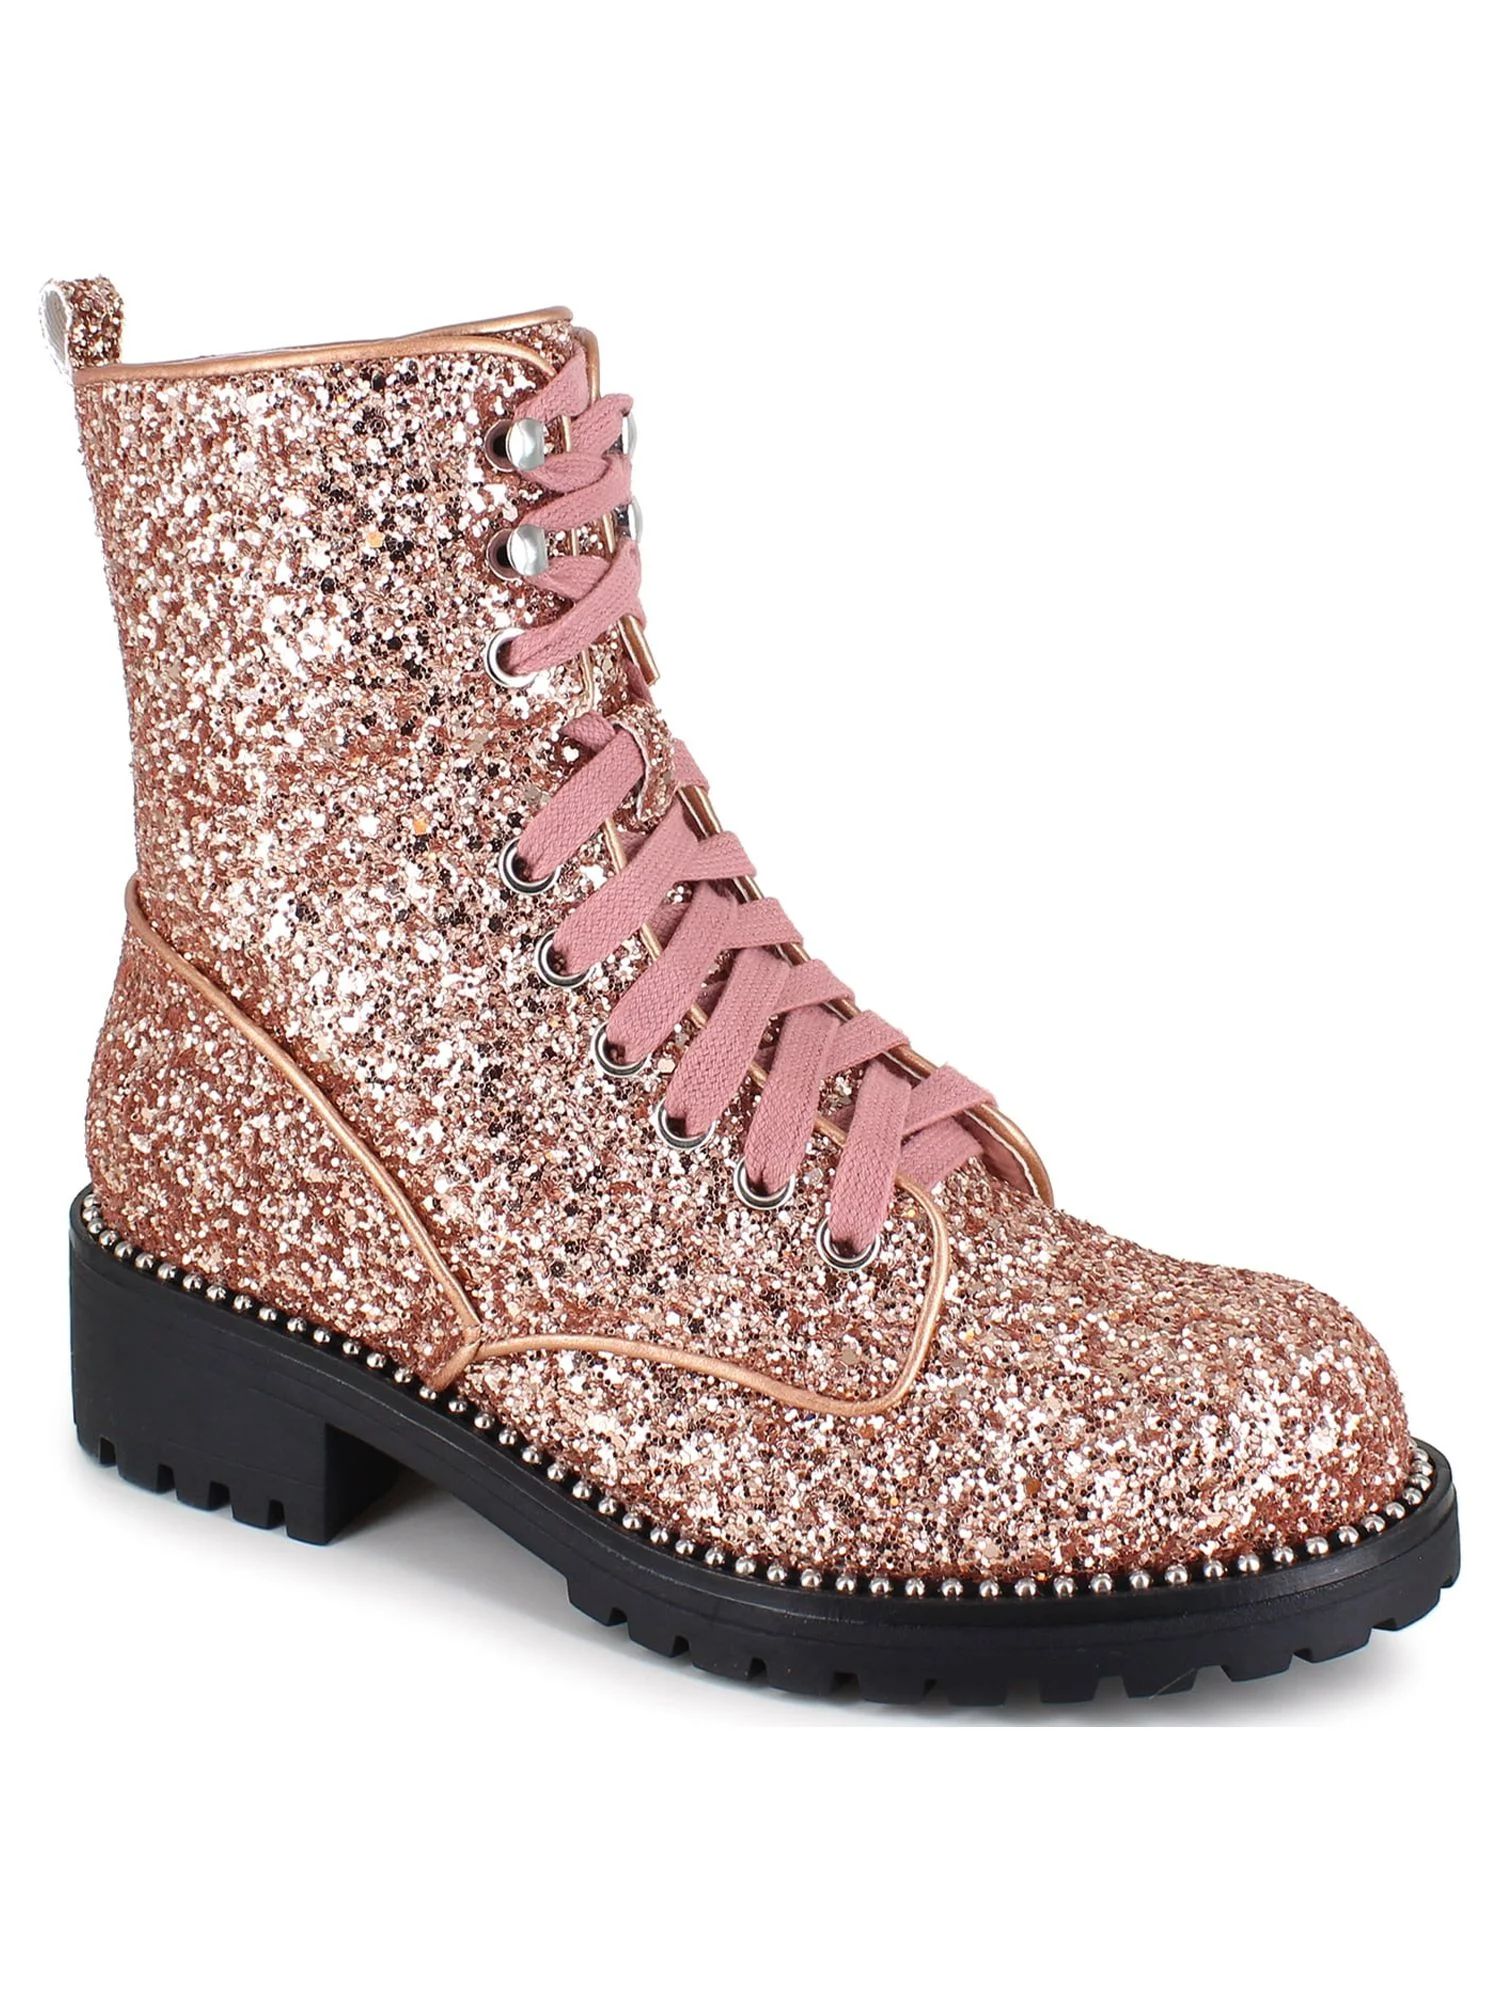 PORTLAND by Portland Boot Company Women's Glitter Lace Up Boot | Walmart (US)